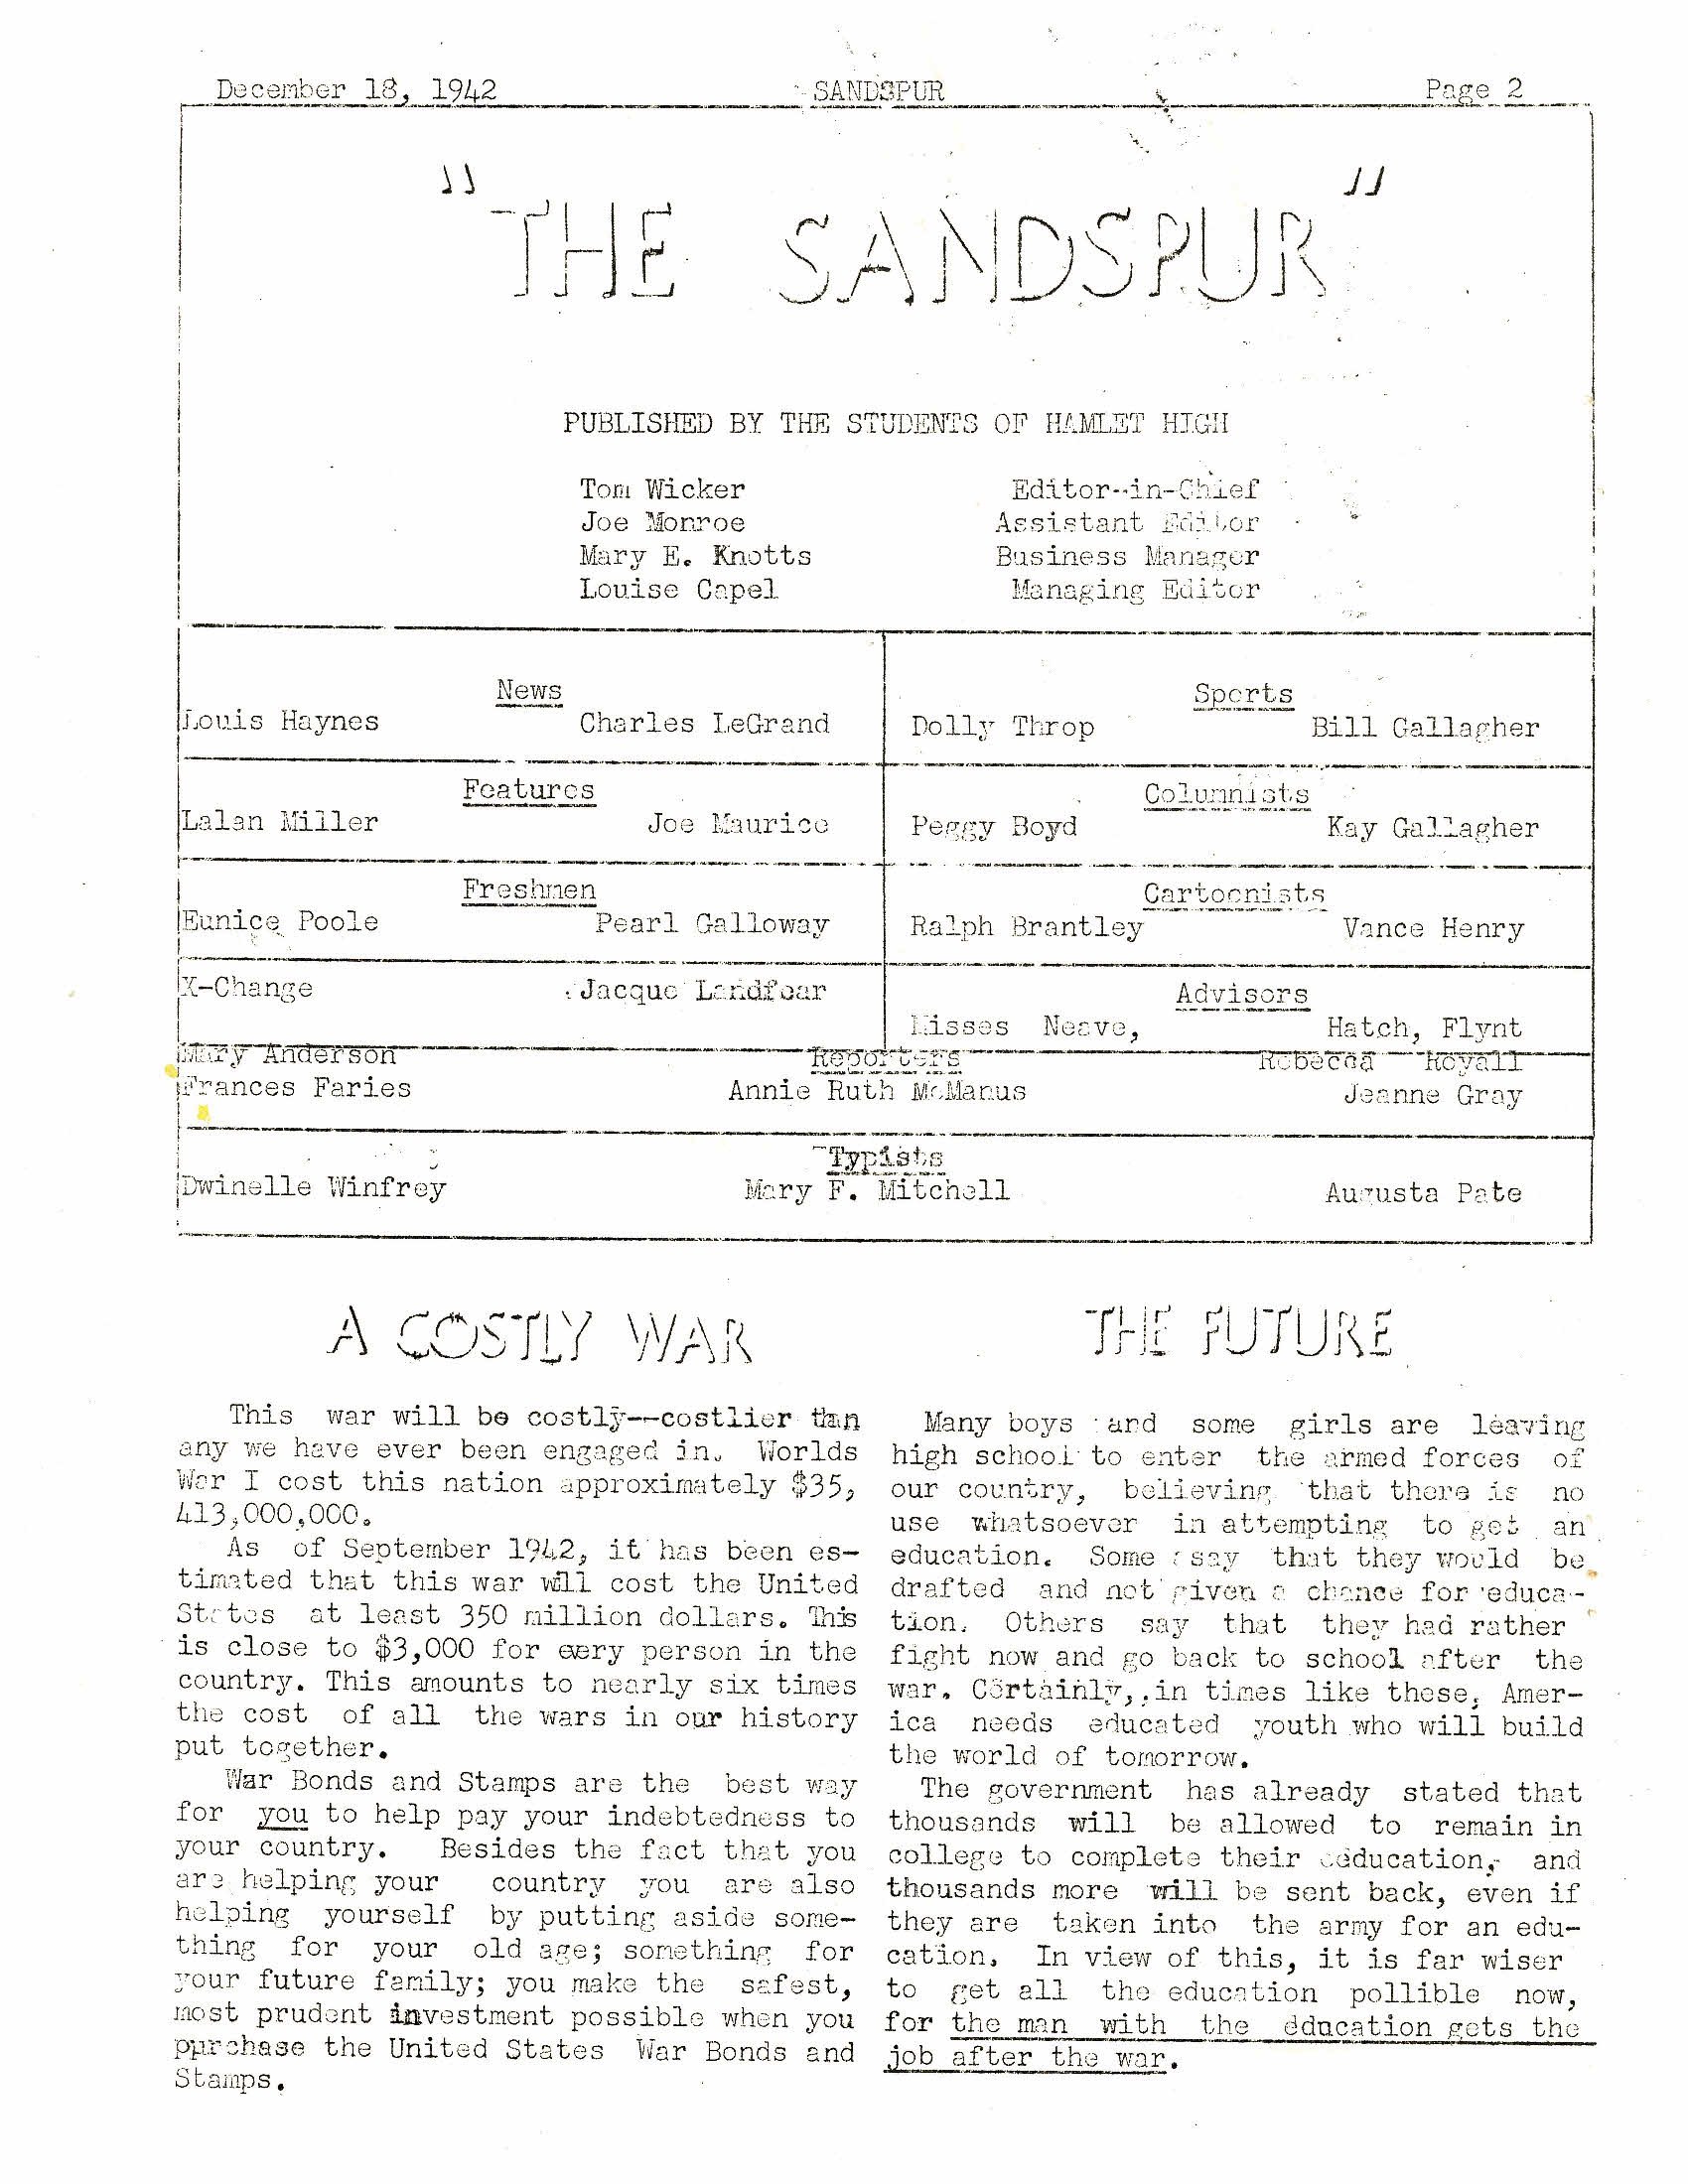 Sandspur December 18, 1942 (4).jpg